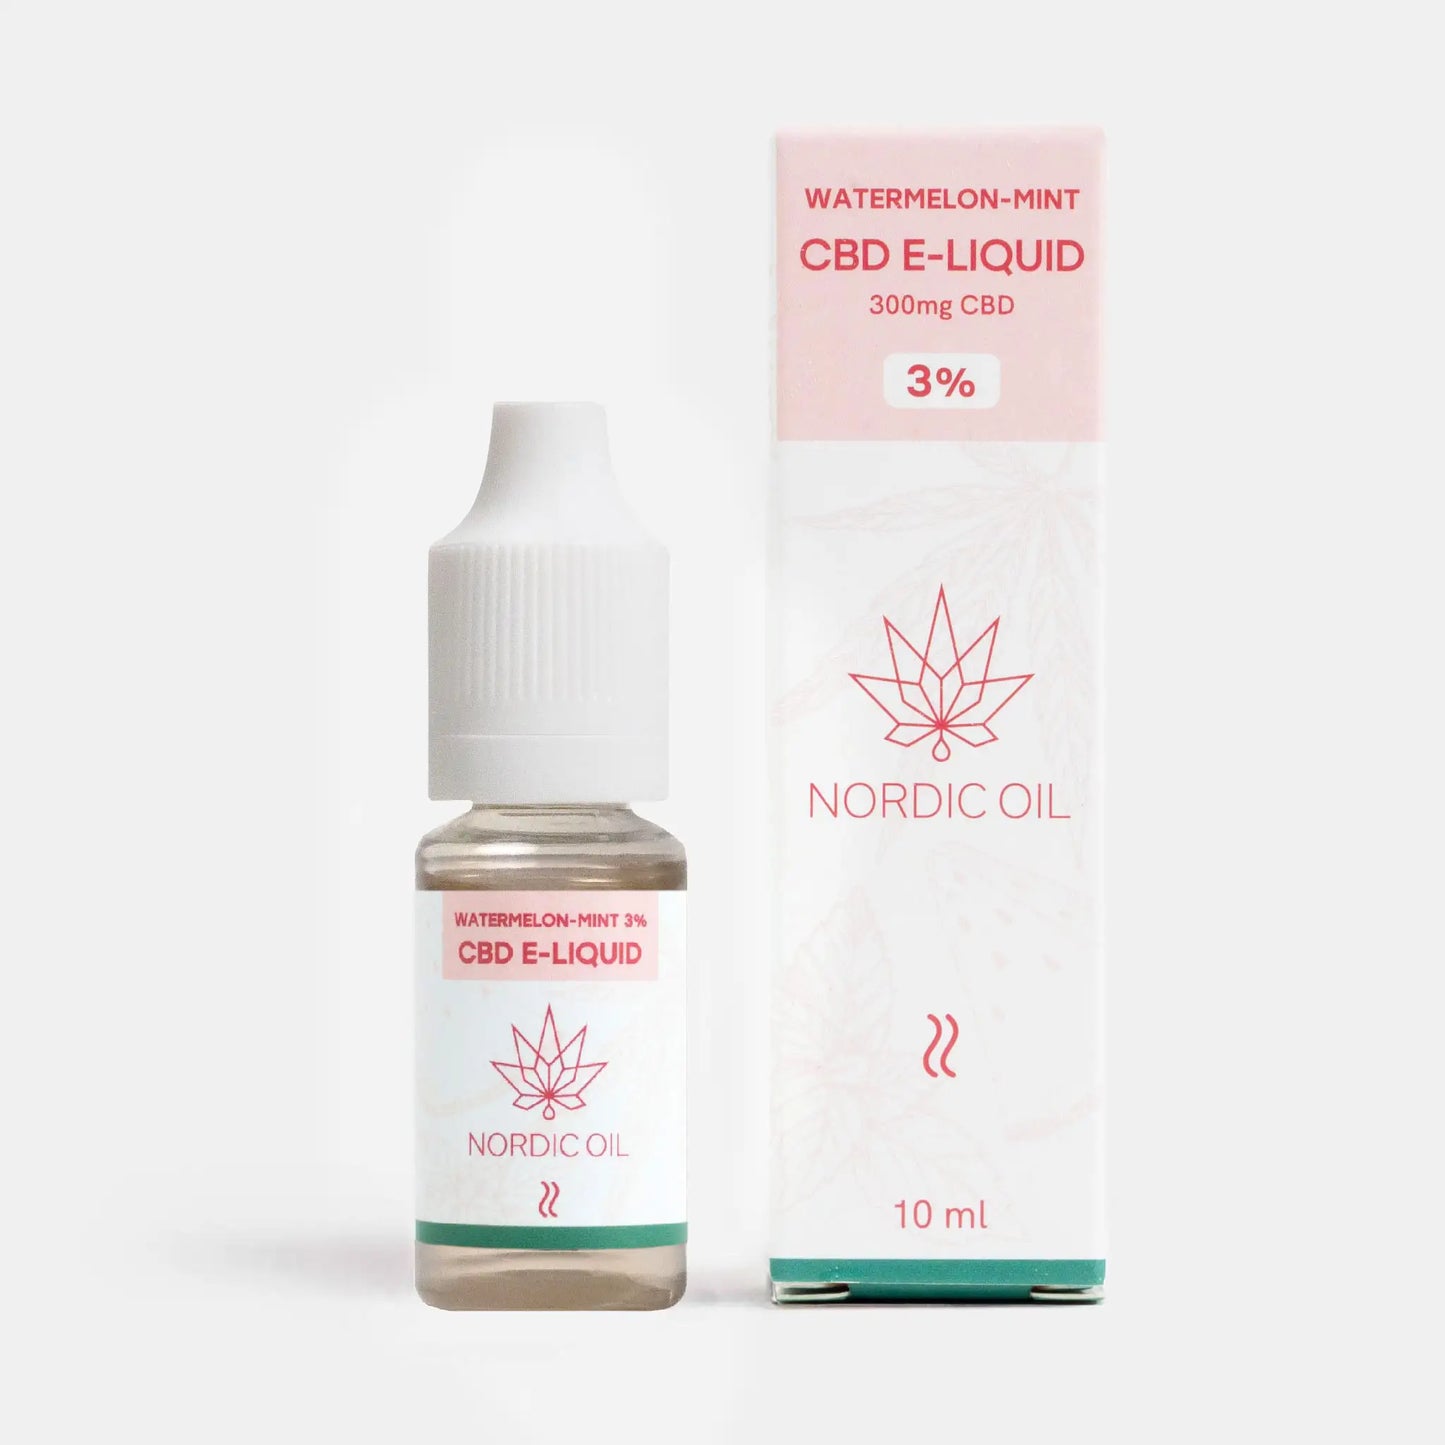 CBD E-Liquid with Watermelon-Mint flavour (3%) from Nordic Oil